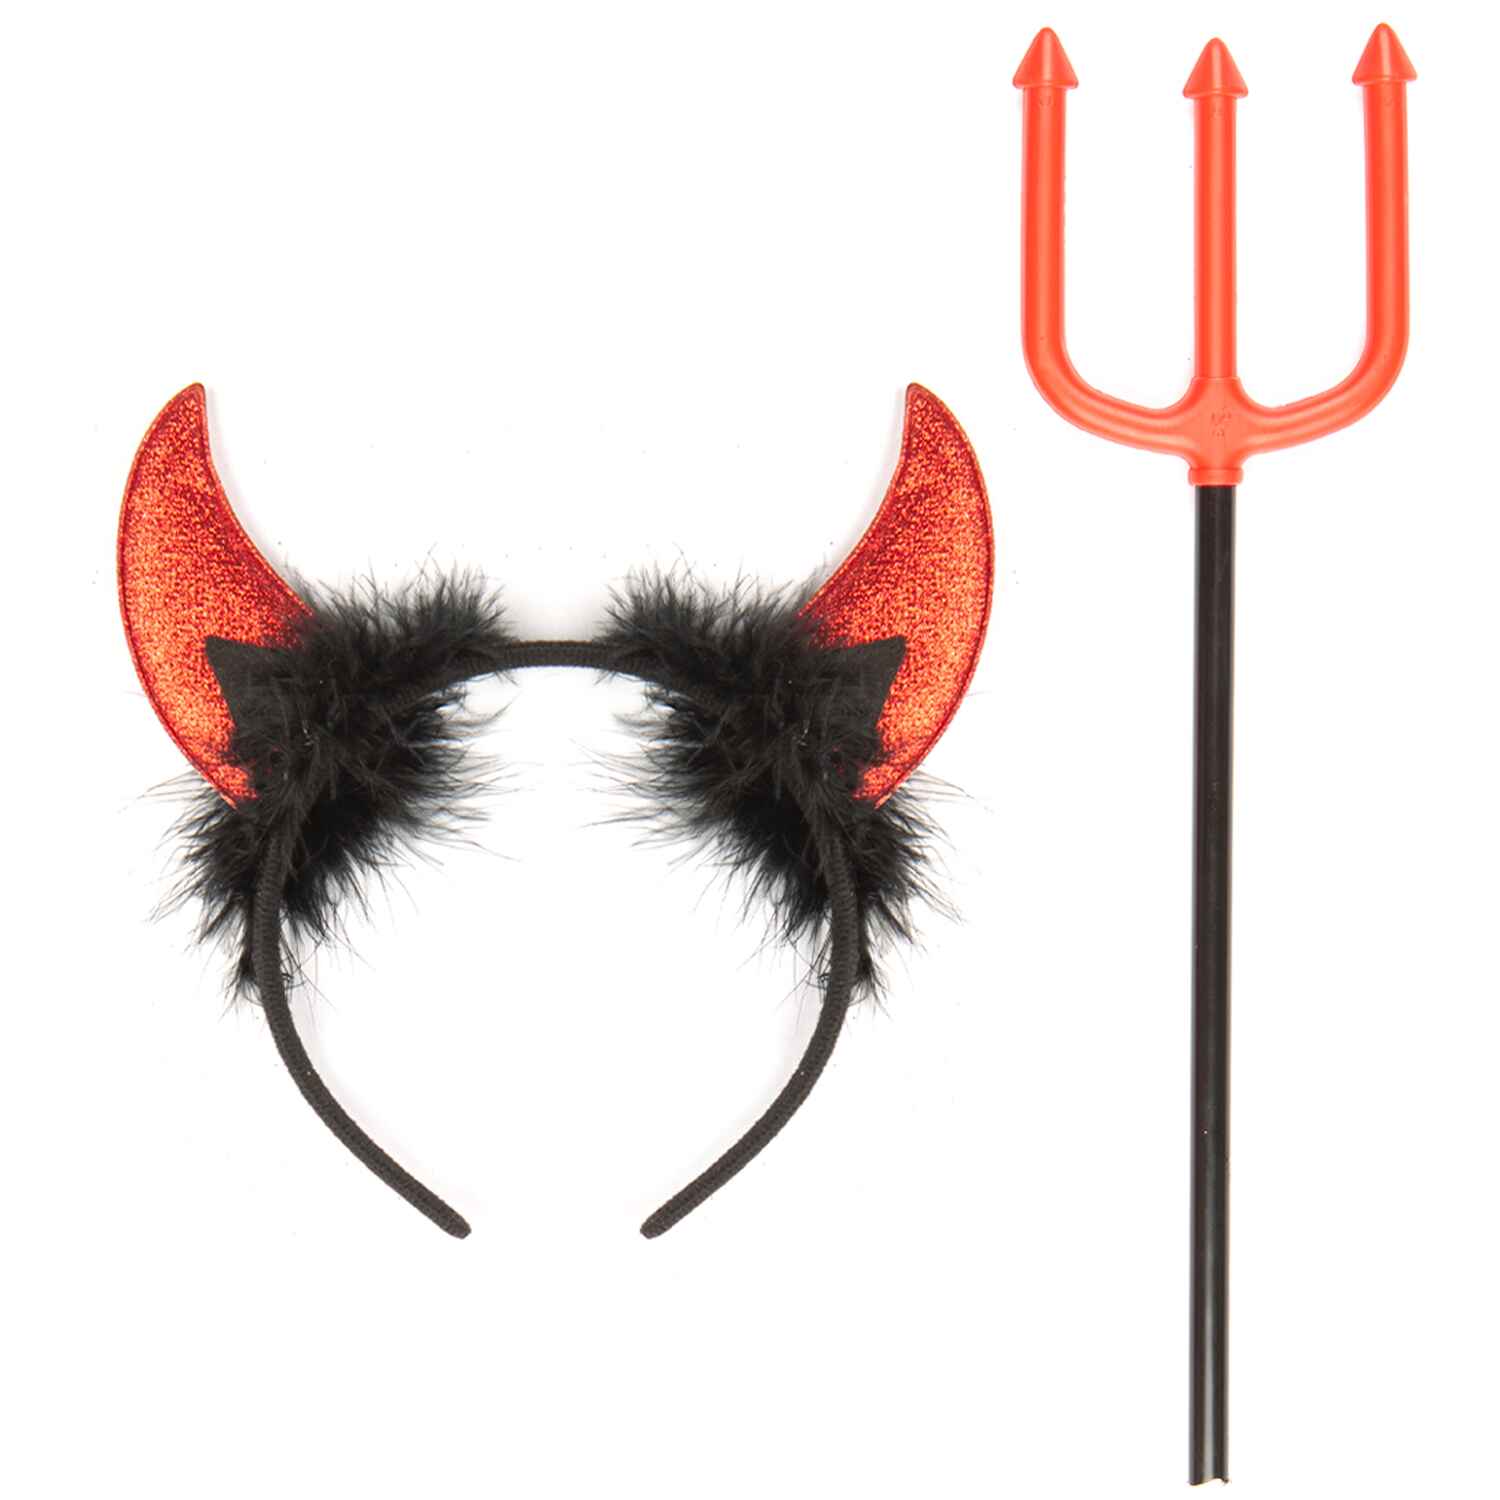 Glitter Devil Ears Headband with Pitchfork